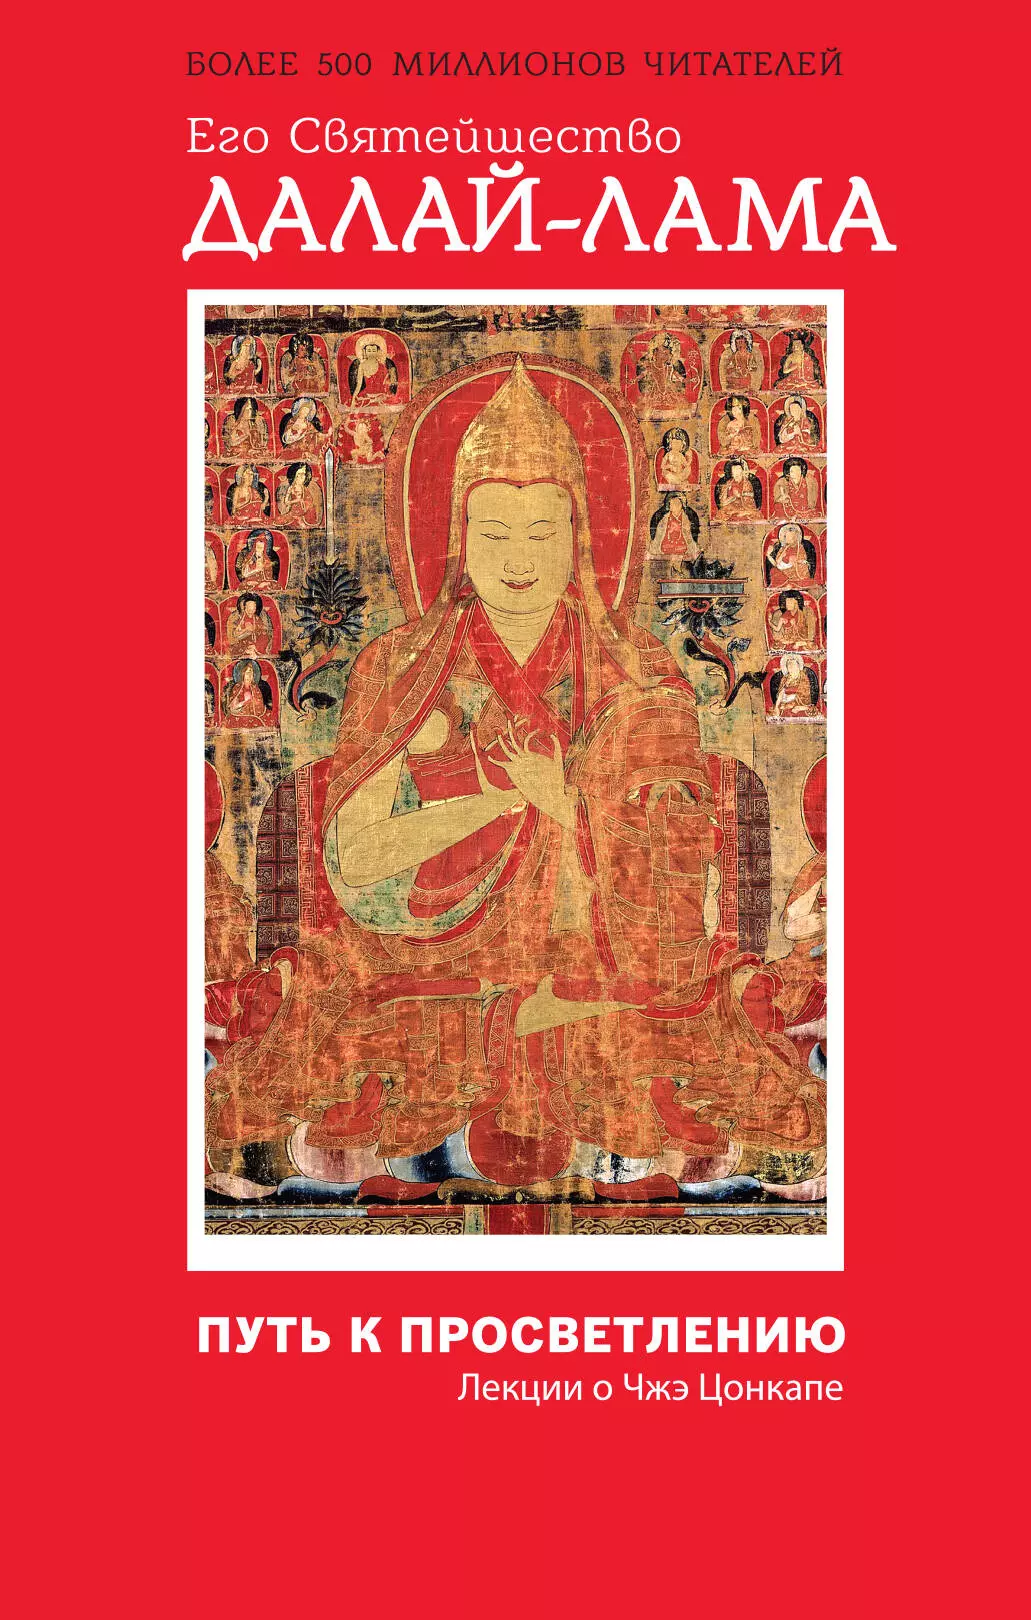 Далай Лама 14 Нгагванг Ловзанг Тэнцзин Гьямцхо, Далай-лама XIV - Путь к просветлению: лекции о Чжэ Цонкапе